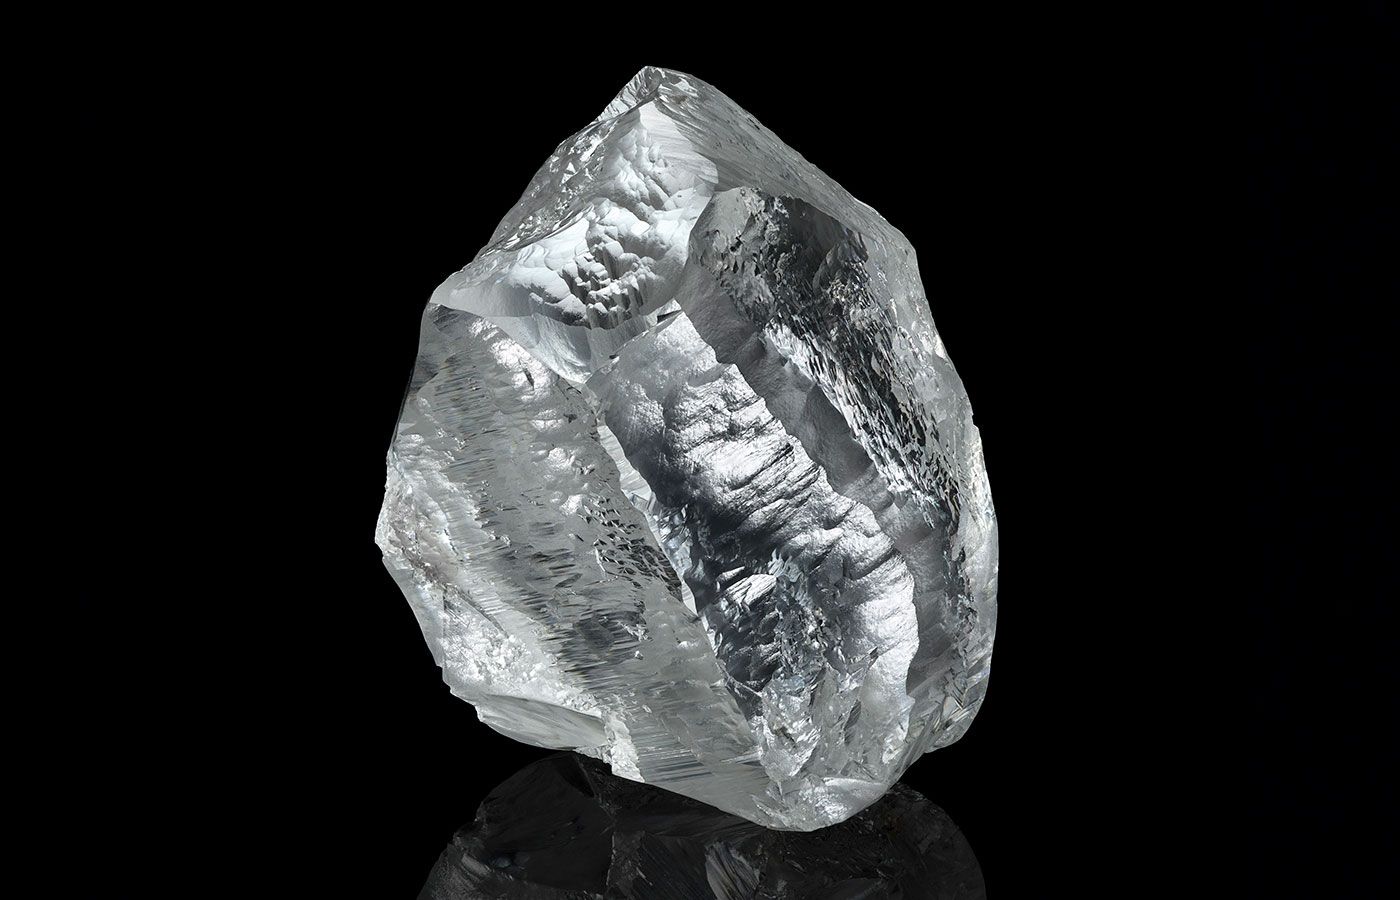 The 549-carat diamond recovered in Botswana